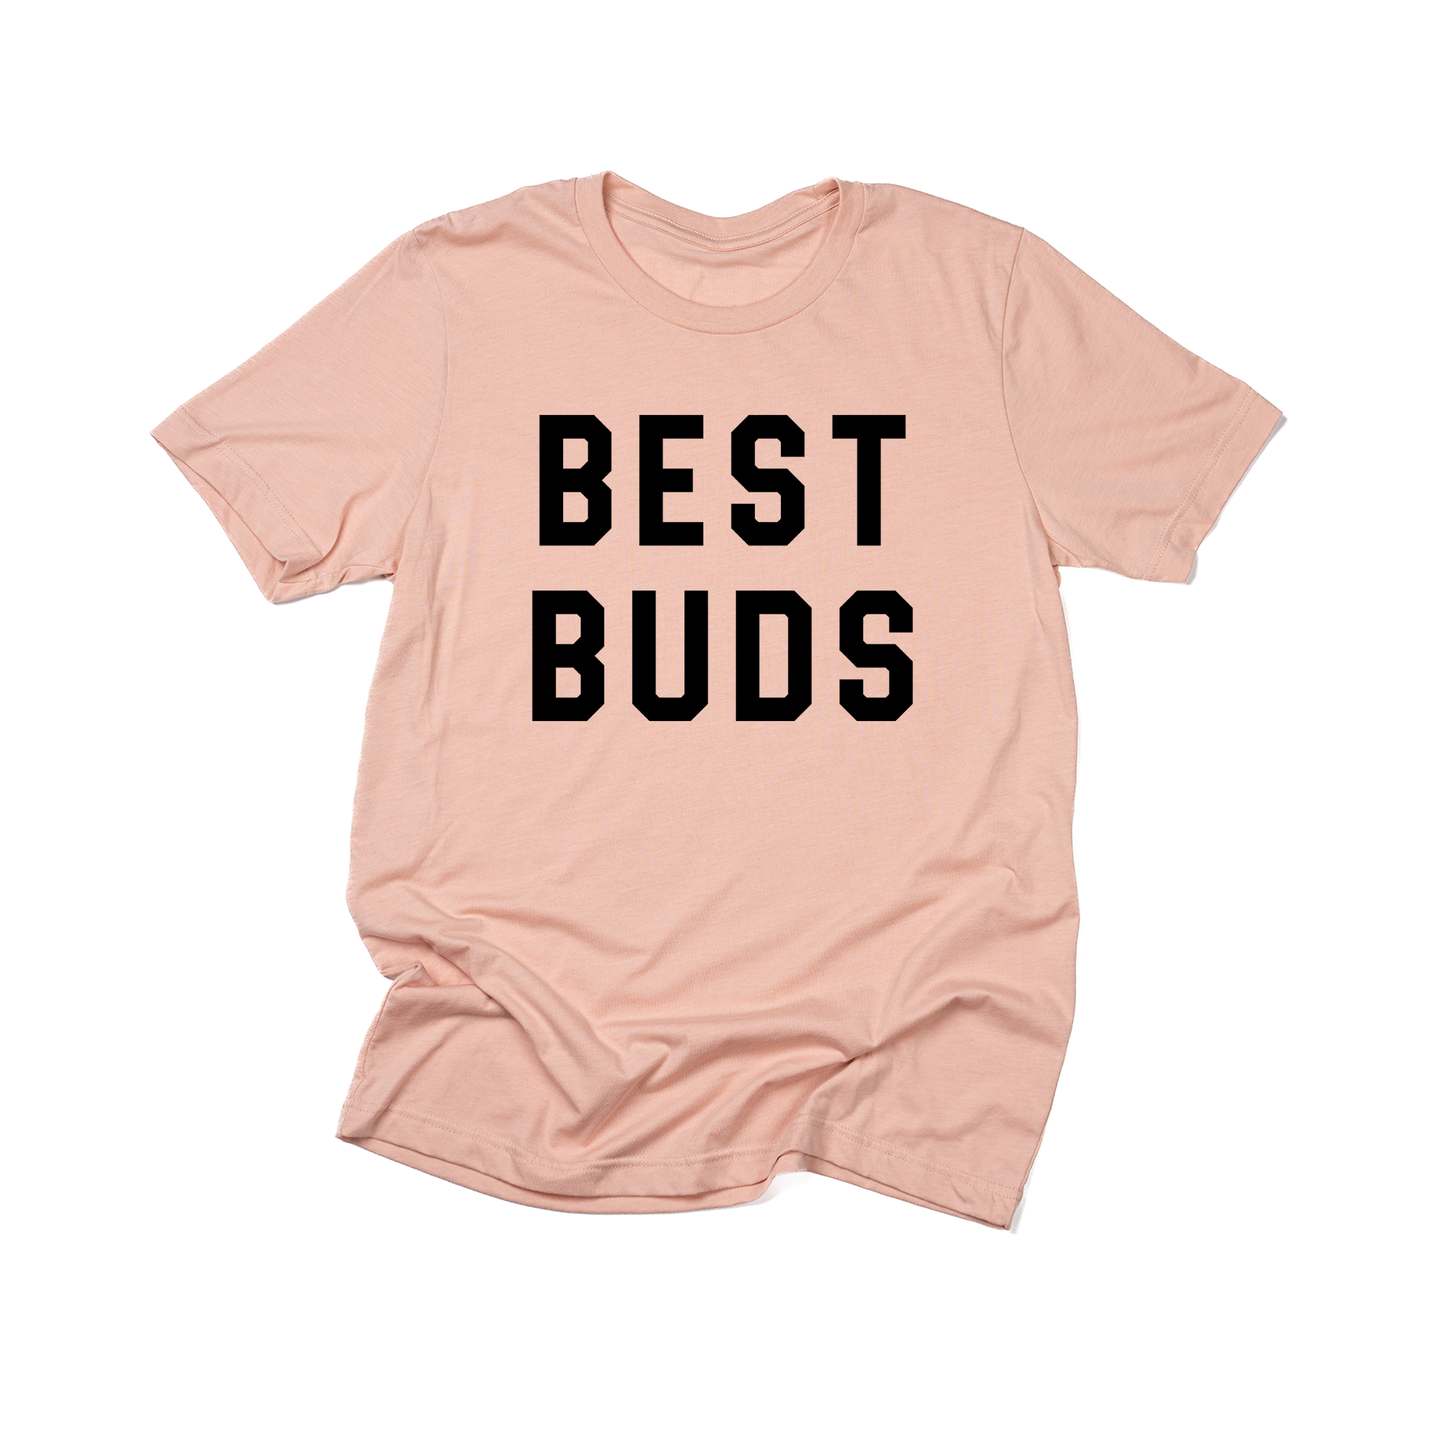 Best Buds (Across Front, Black) - Tee (Peach)